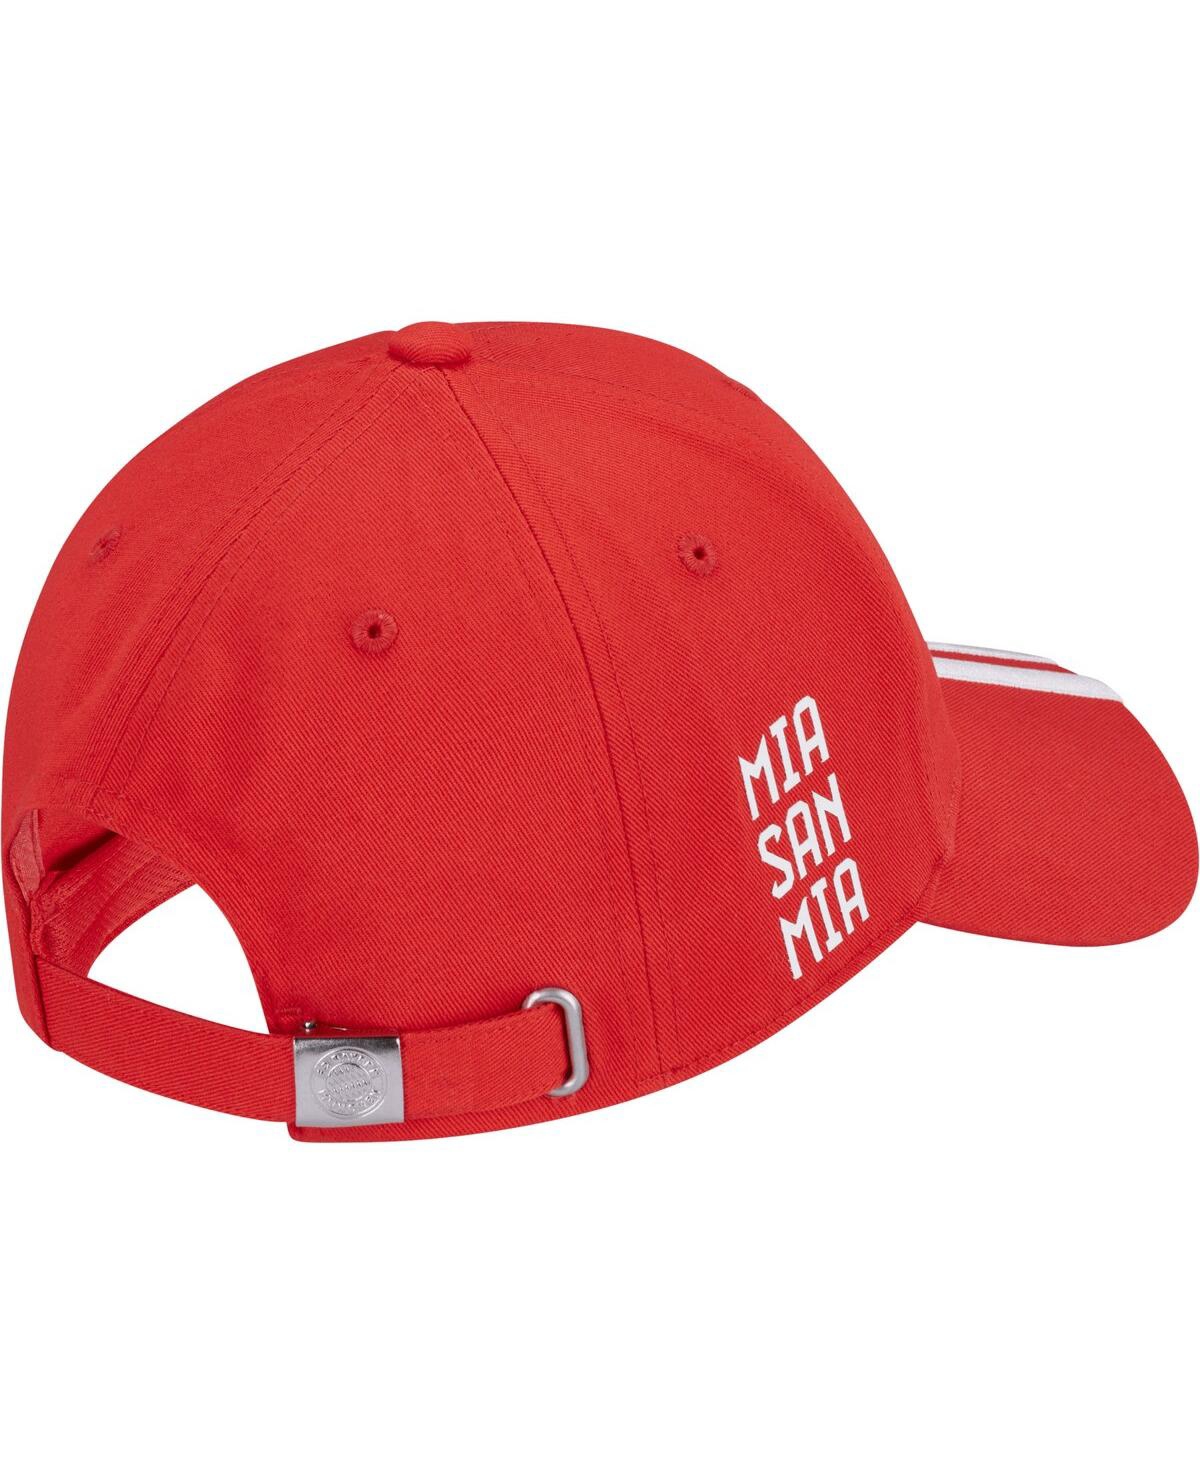 Shop Adidas Originals Men's Adidas Red Bayern Munich Baseballâ Adjustable Hat